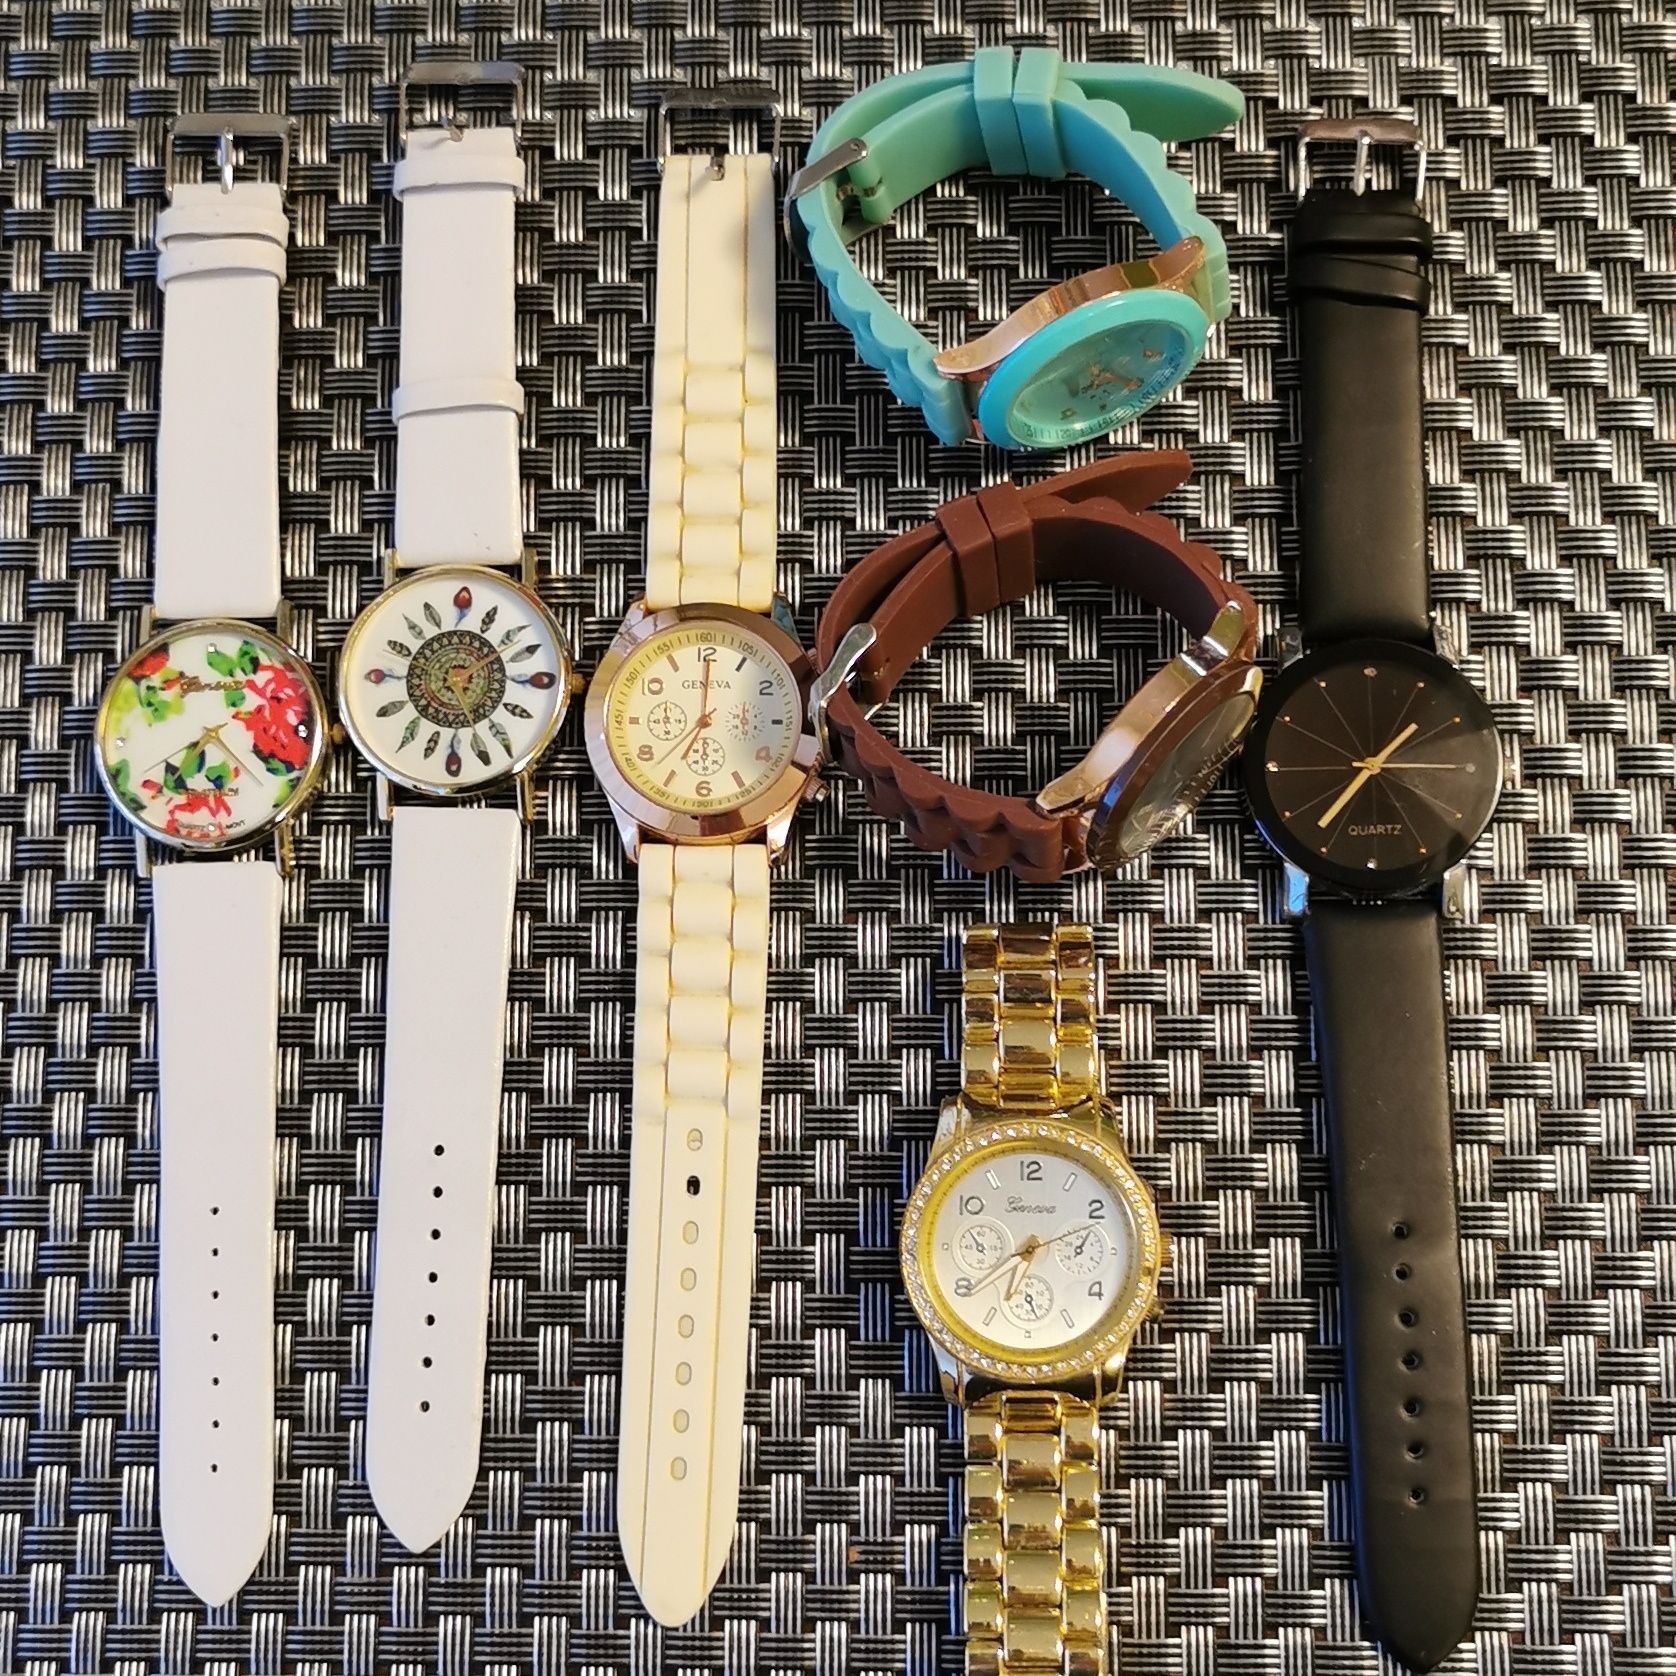 Zegarki - zestaw 7 sztuk zegarków / zegarek